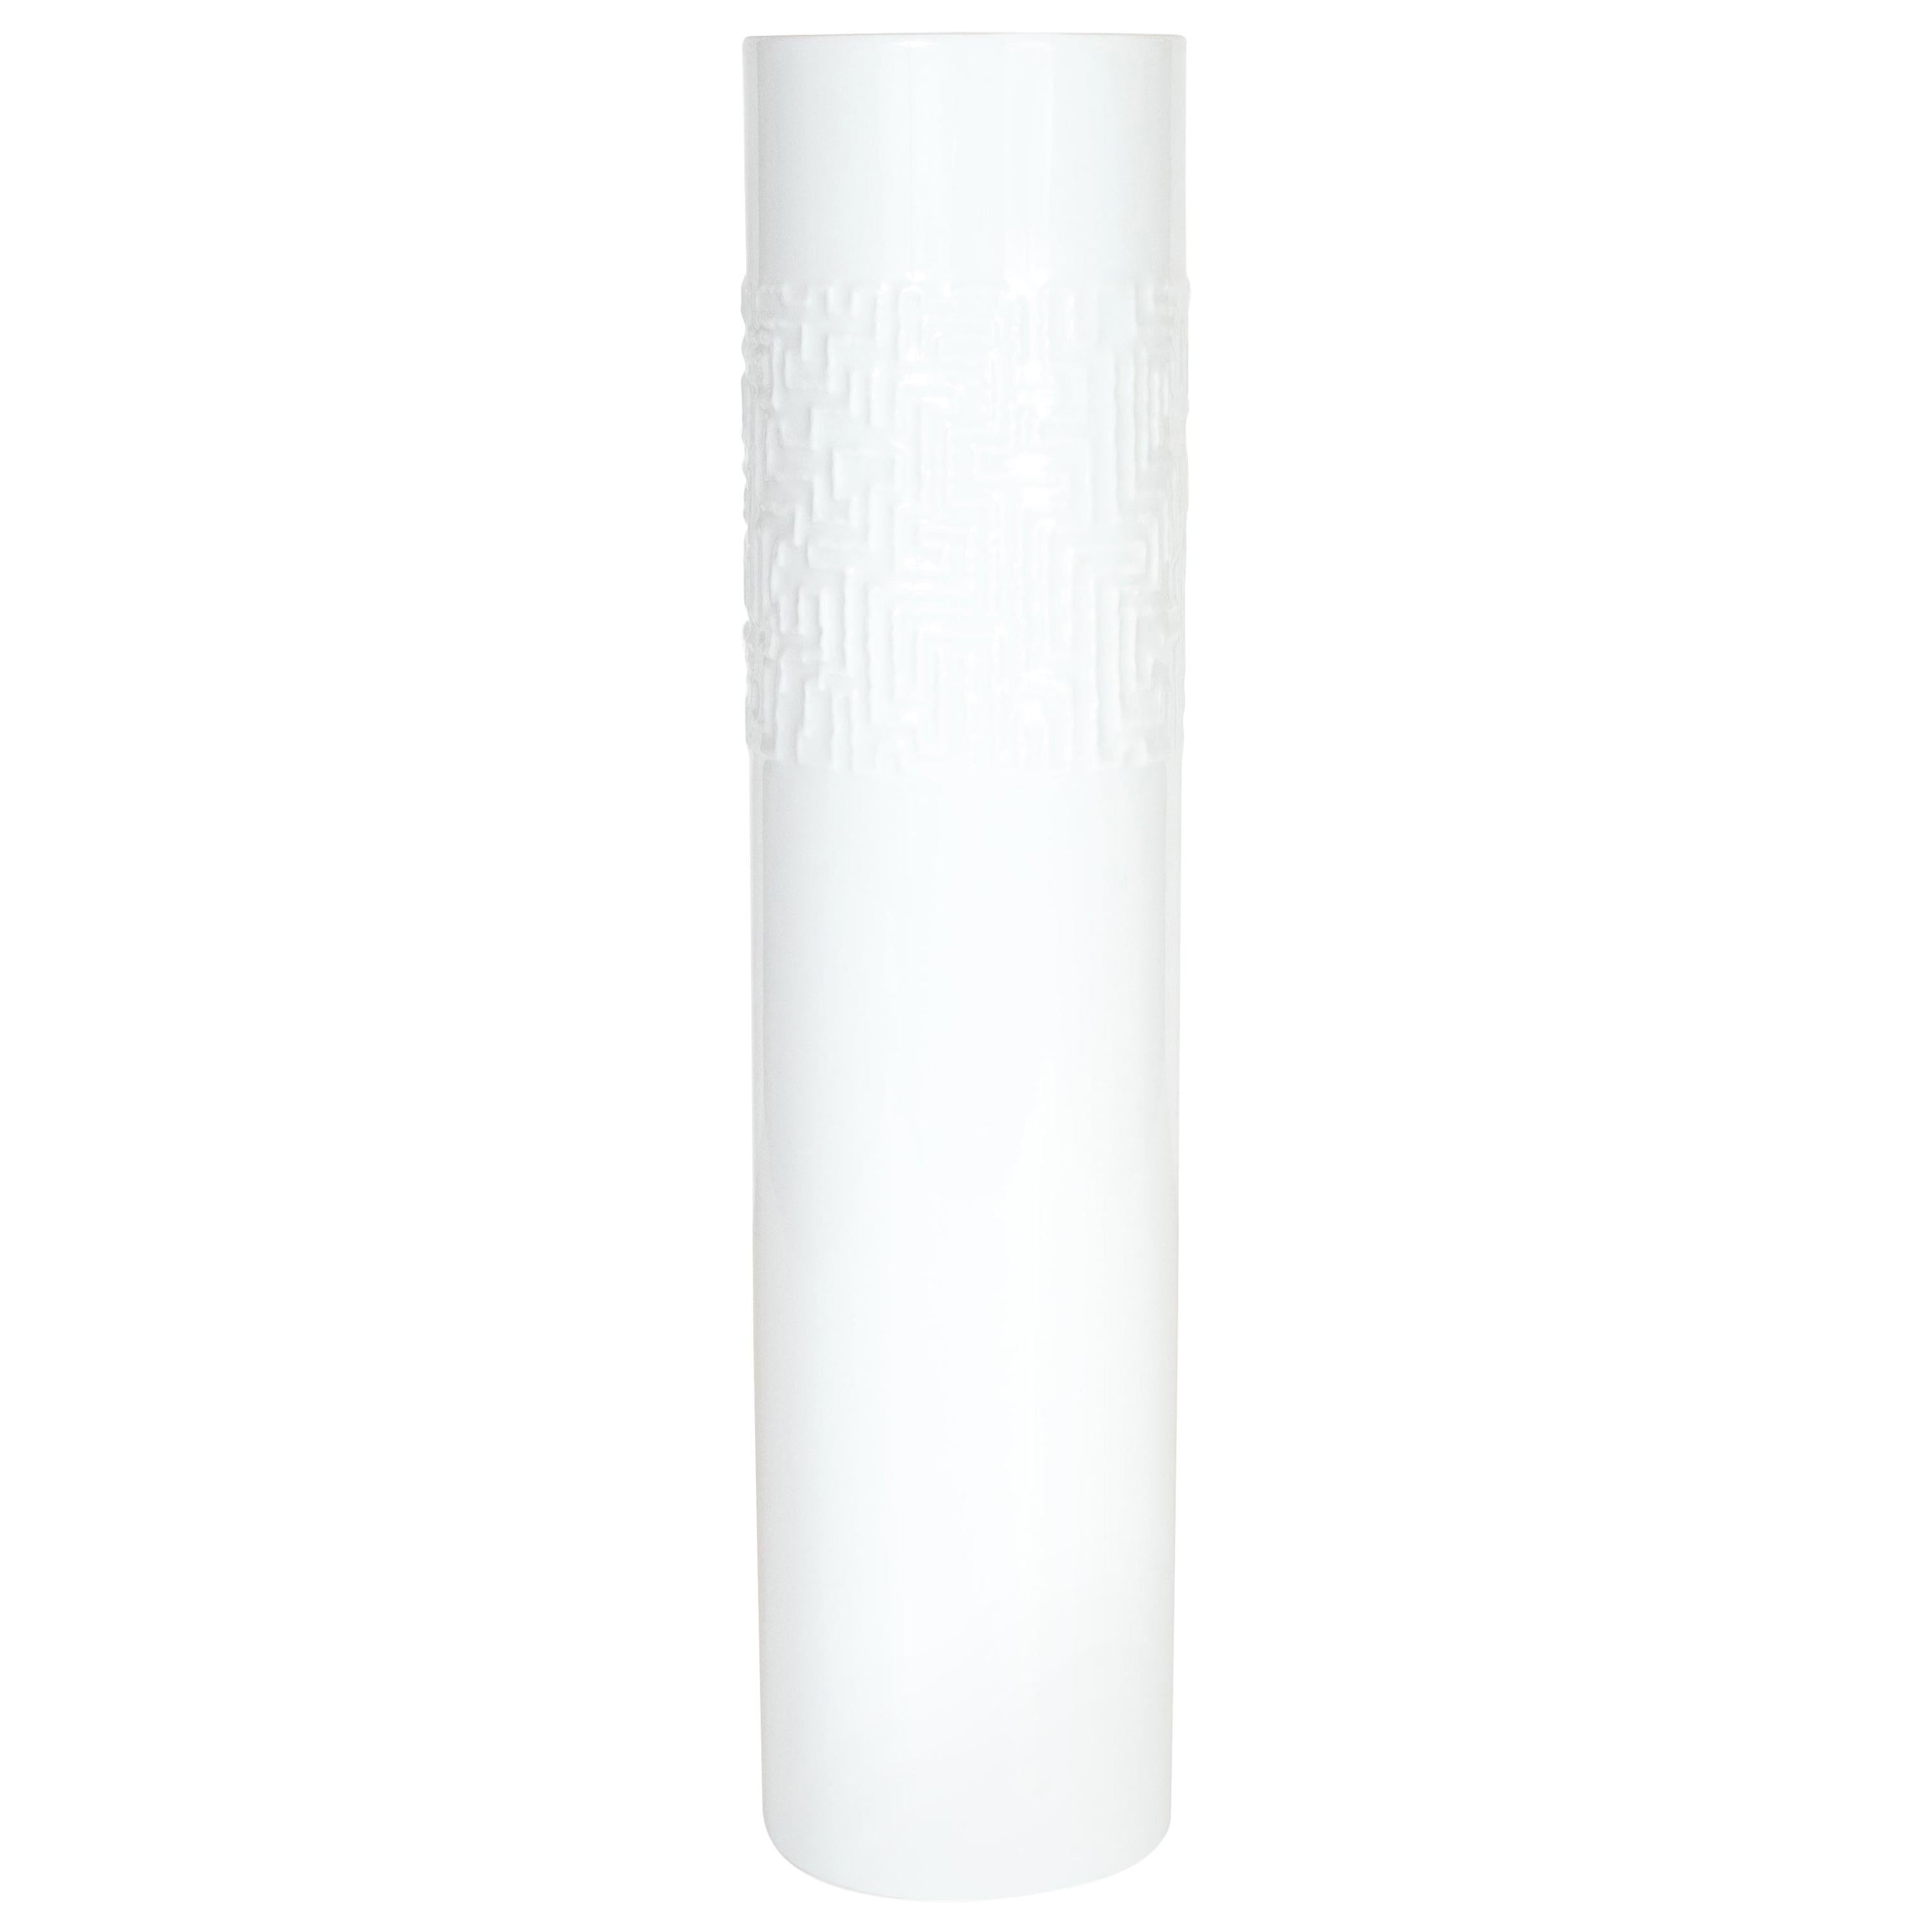 White Ceramic Cylindrical Vase with Raised Brutalist Design by Rosenthal